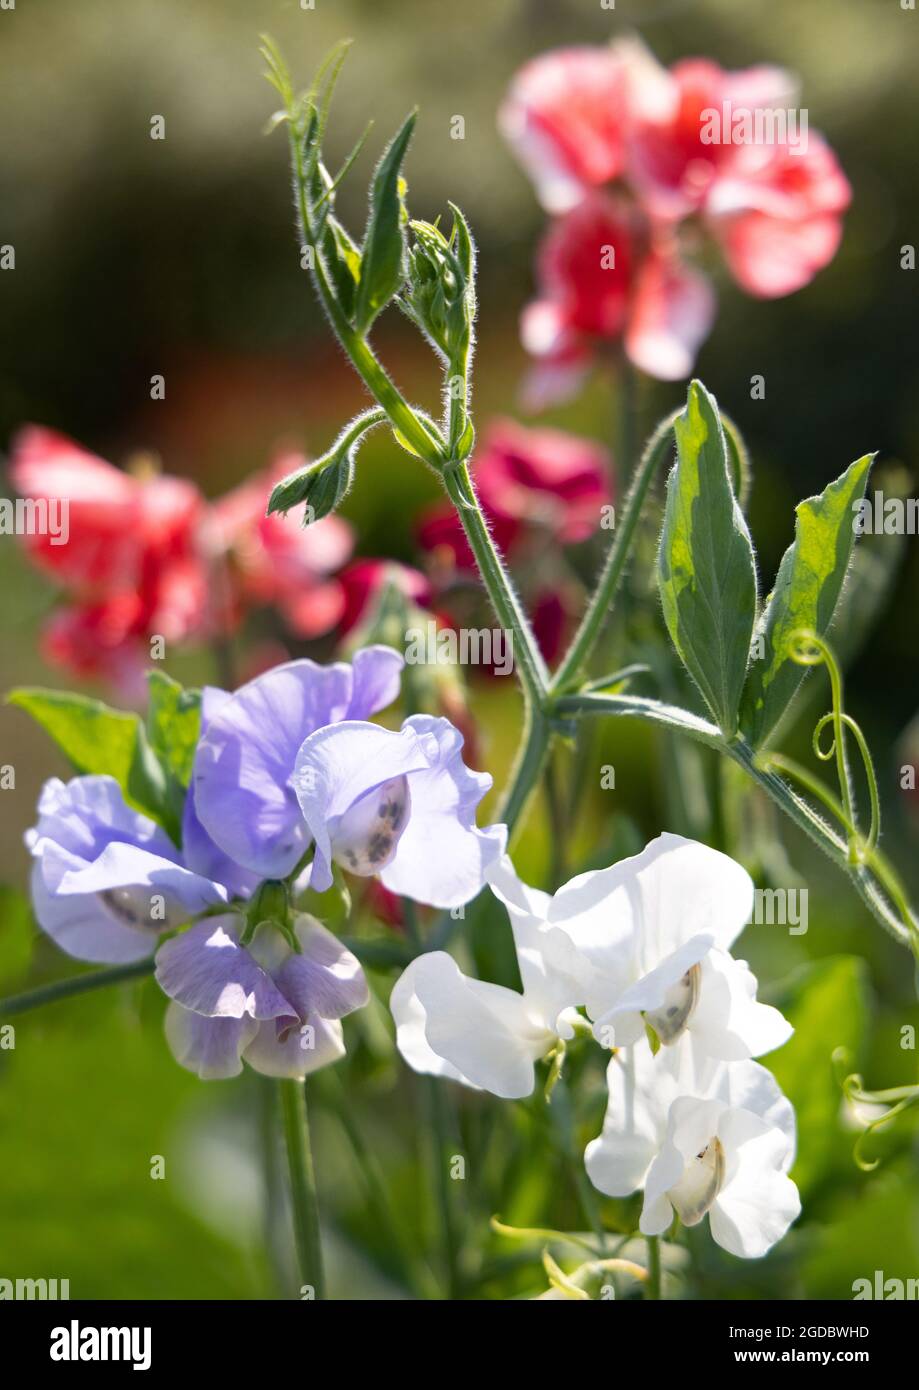 Sweet peas flowering, Lathyrus odoratus, garden flowers of different colours in close up, Uk Stock Photo